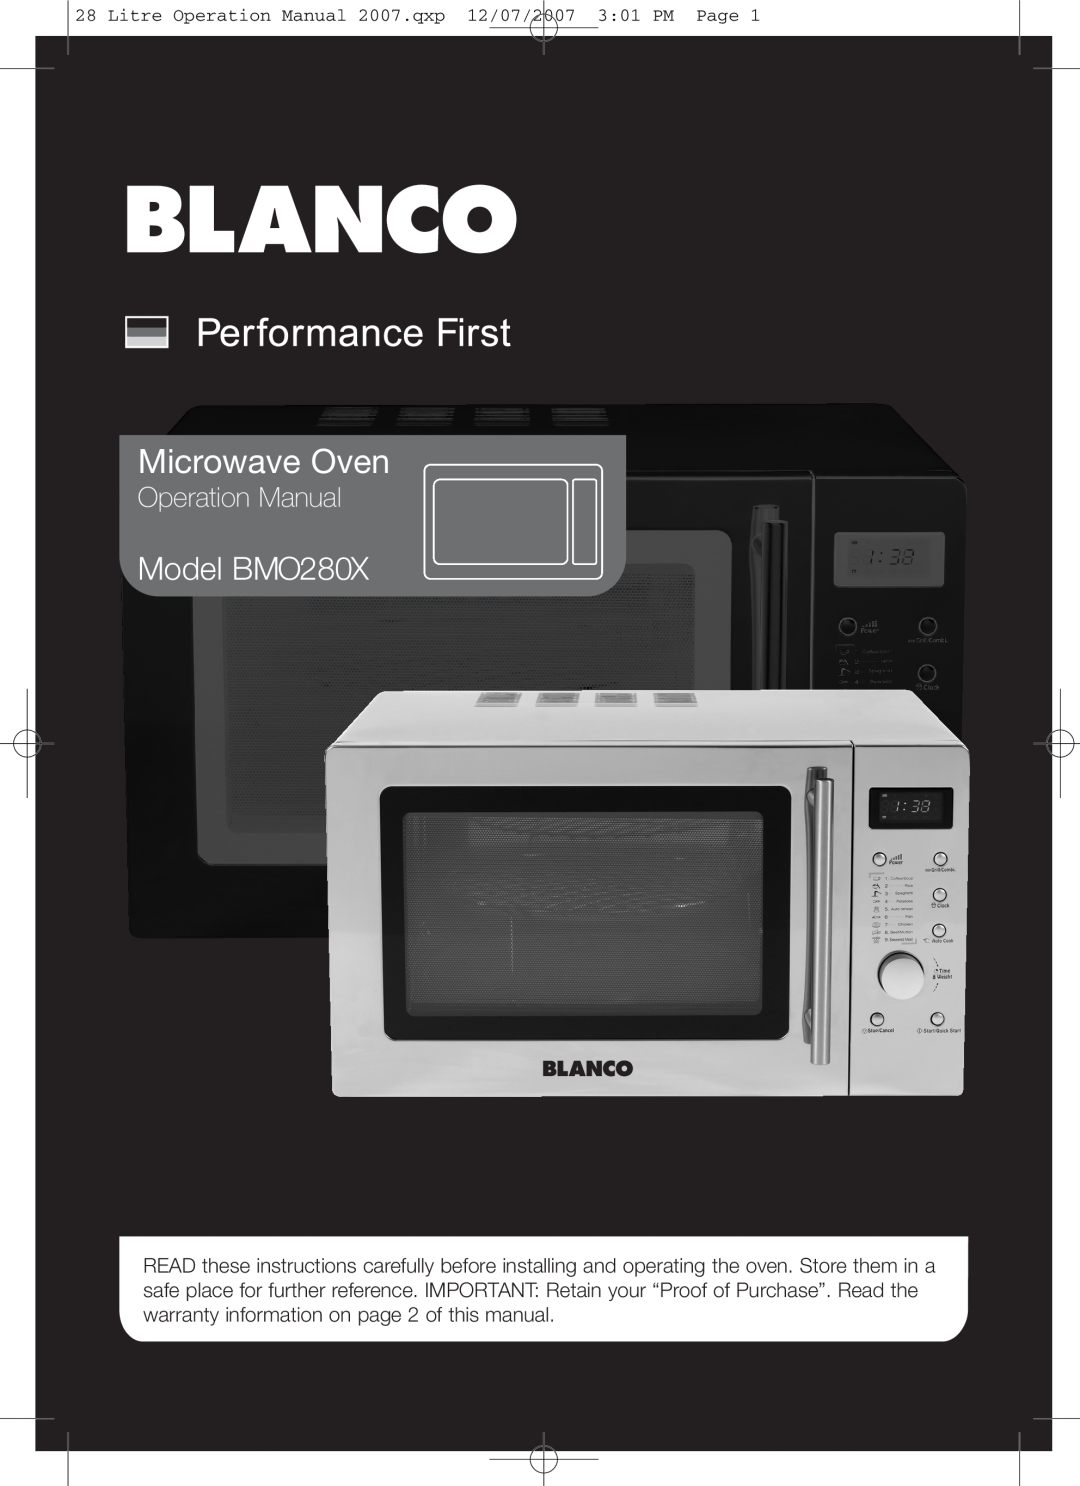 Blanco operation manual Microwave Oven, Model BMO280X 